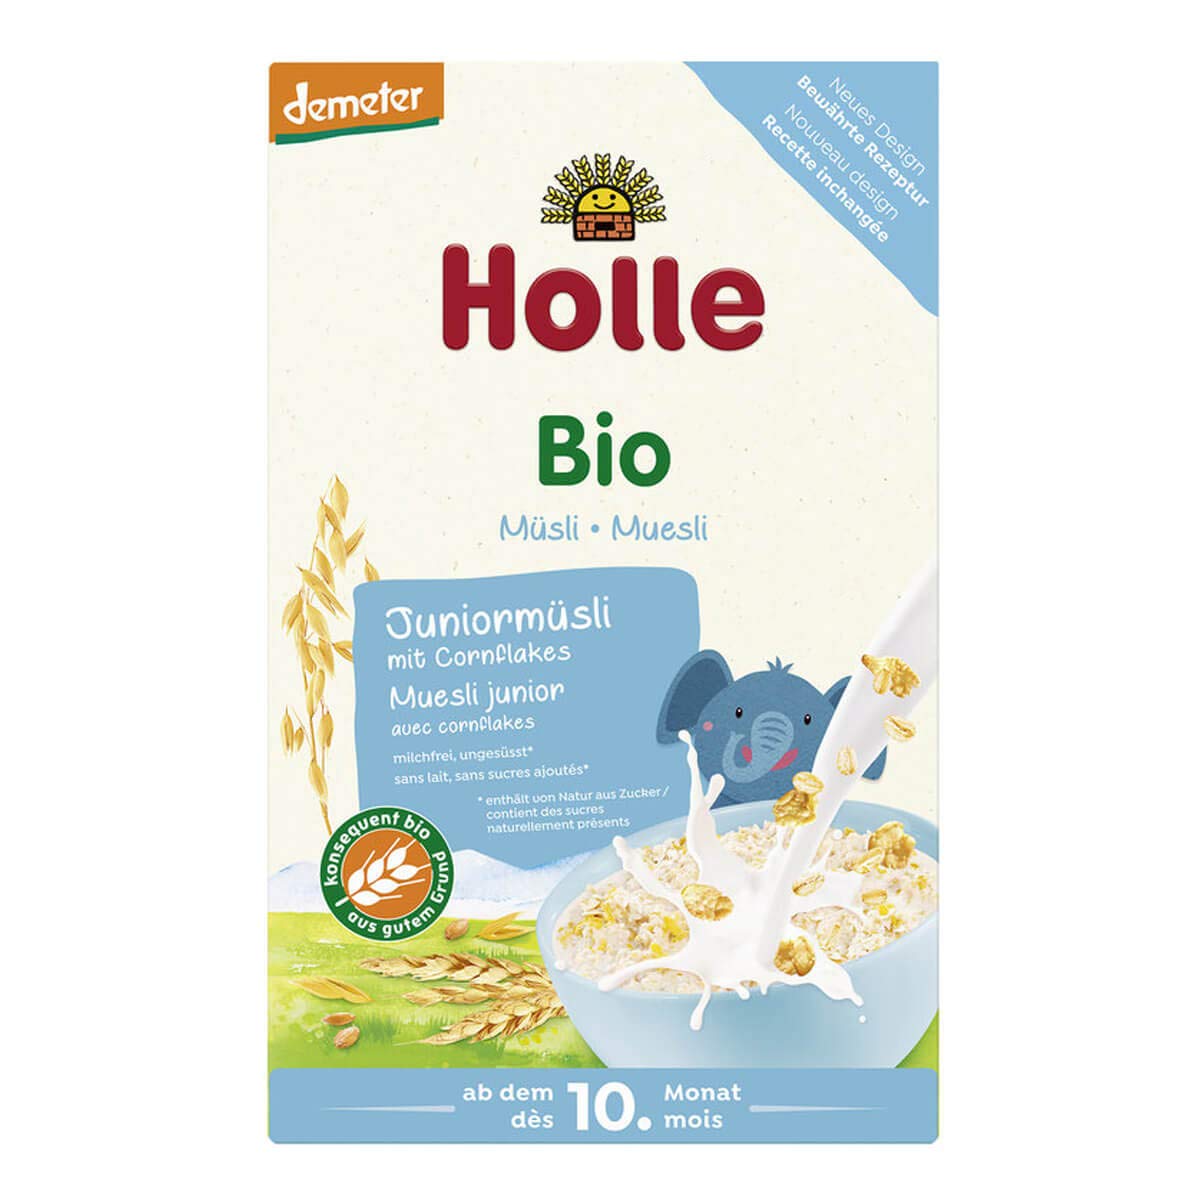 Holle - Bio-Müsli Juniormüsli Mehrkorn mit Cornflakes - 0,25 kg - 8er Pack